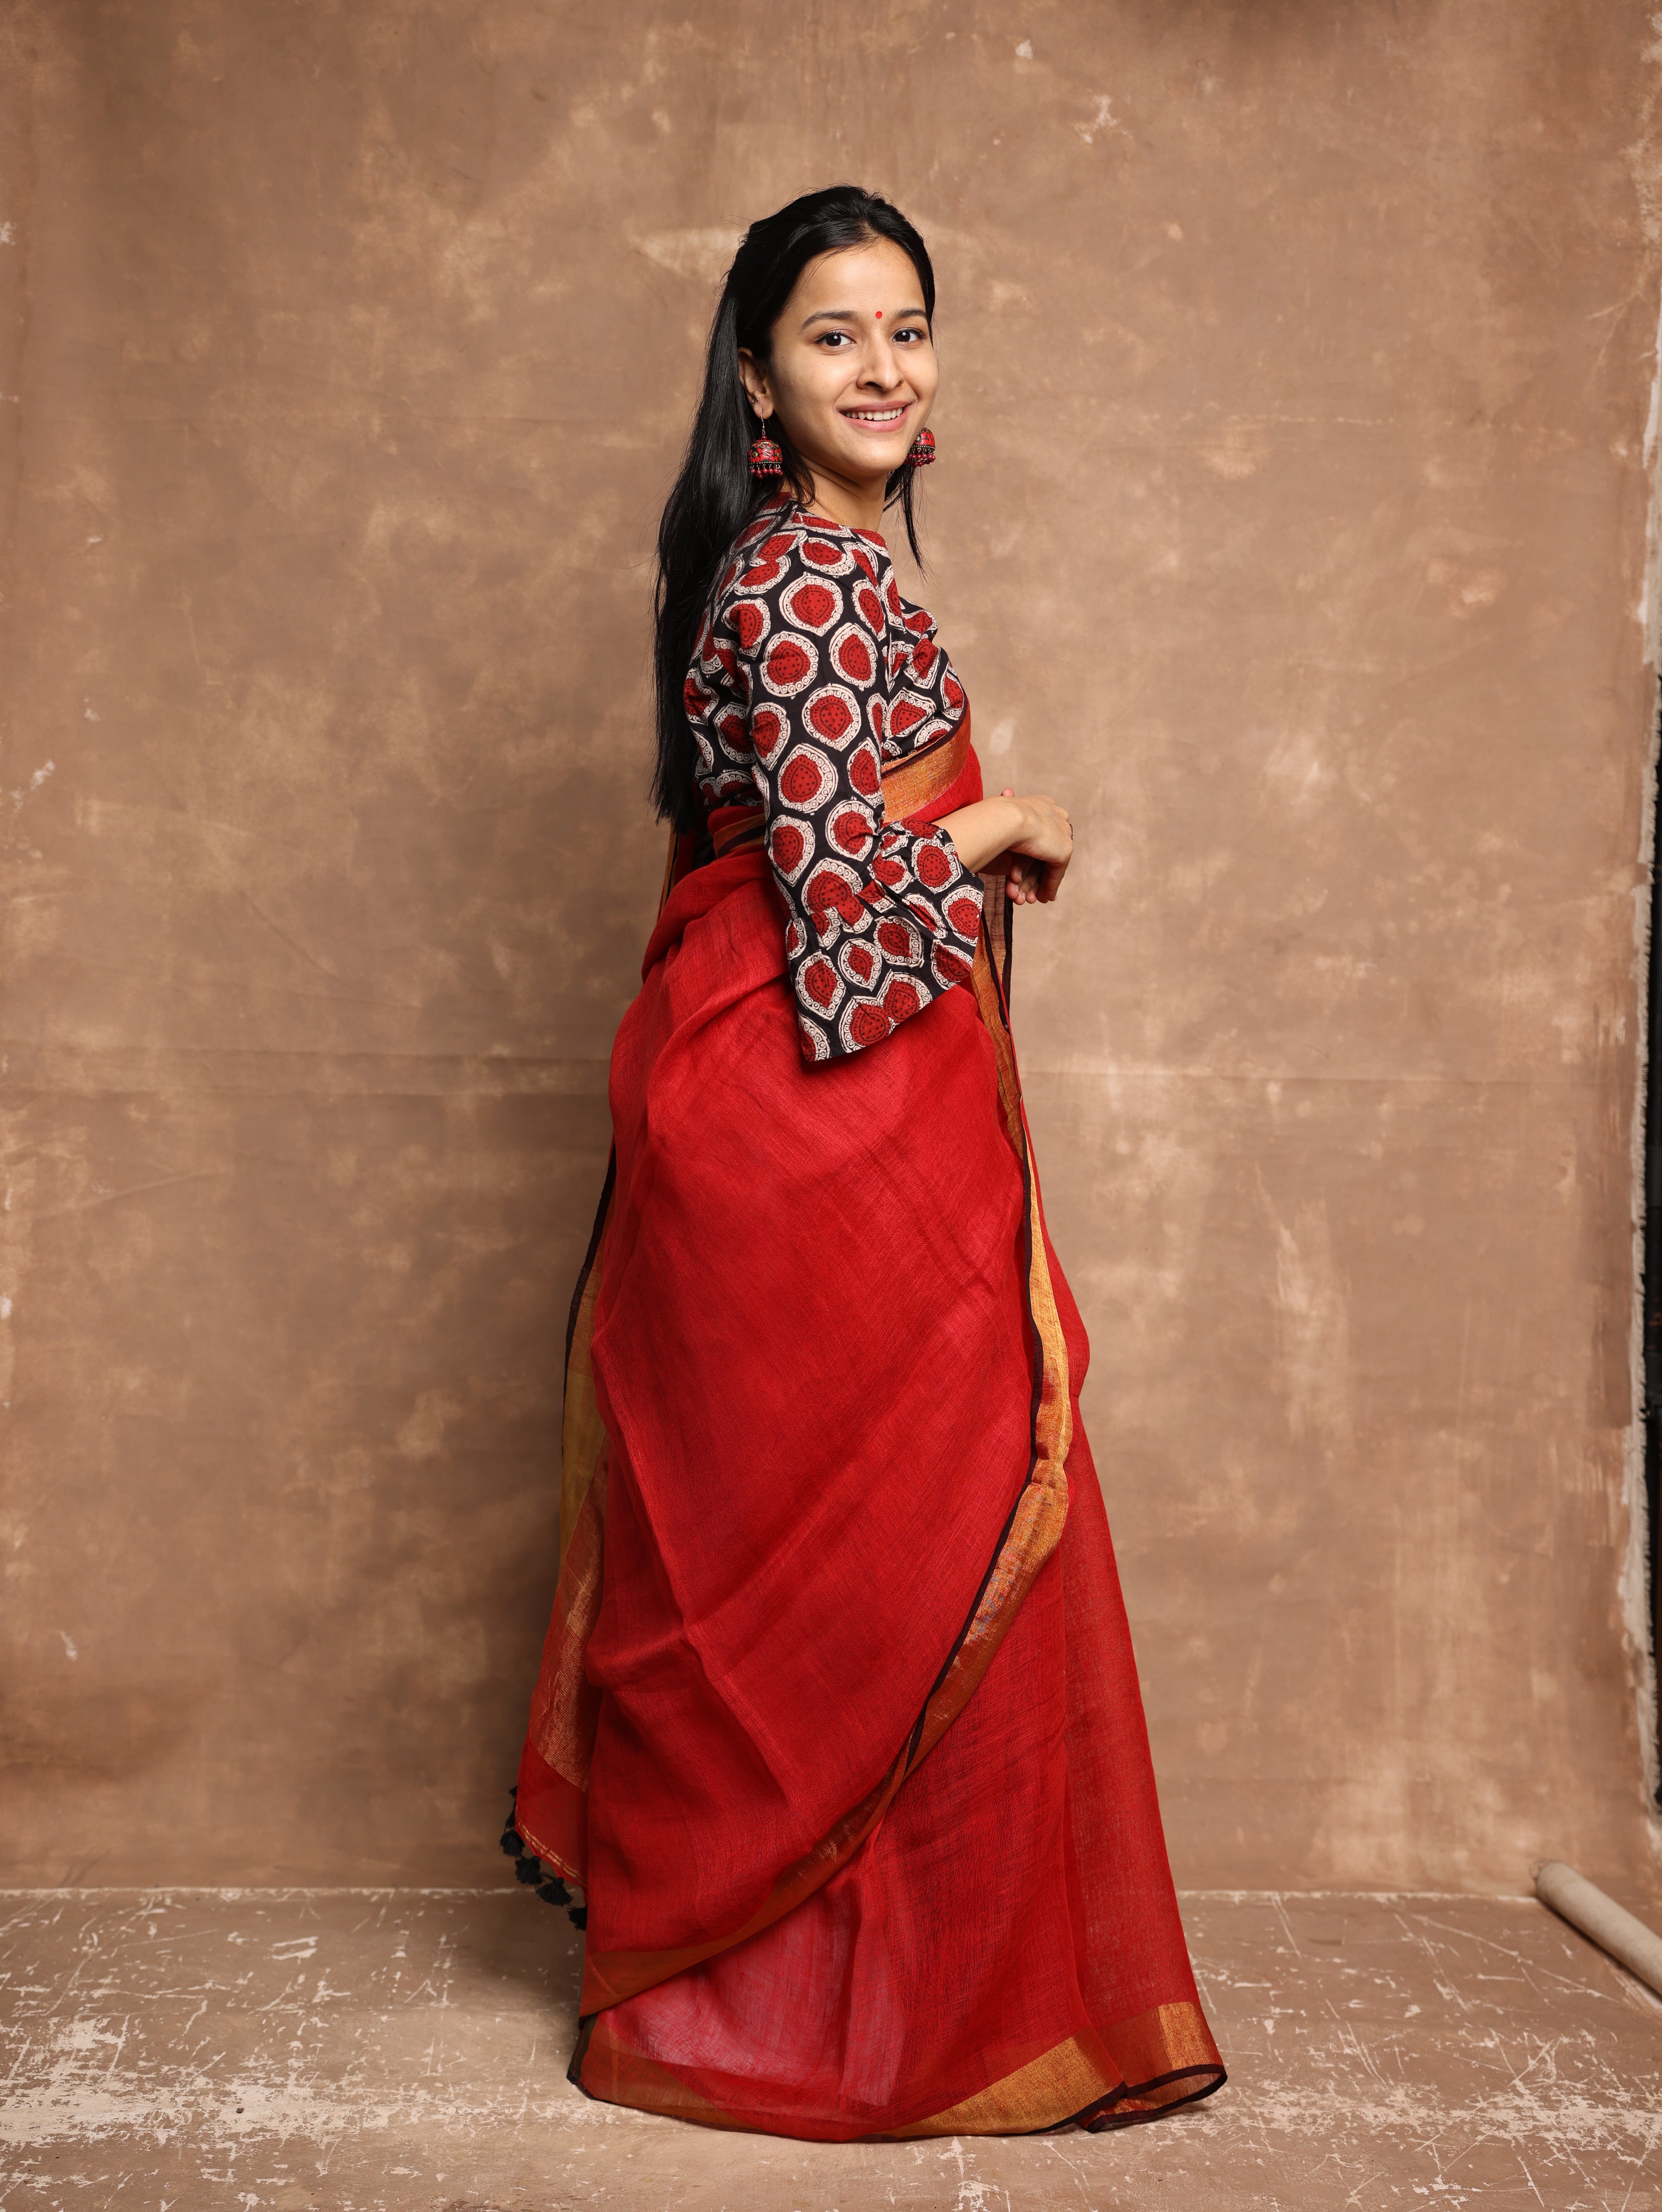 Ilkal dress | Ilkal saree to dress | ಇಳಕಲ್ ಸೀರೆಯಿಂದ ಡ್ರೆಸ್| Irkal dresses |  - YouTube